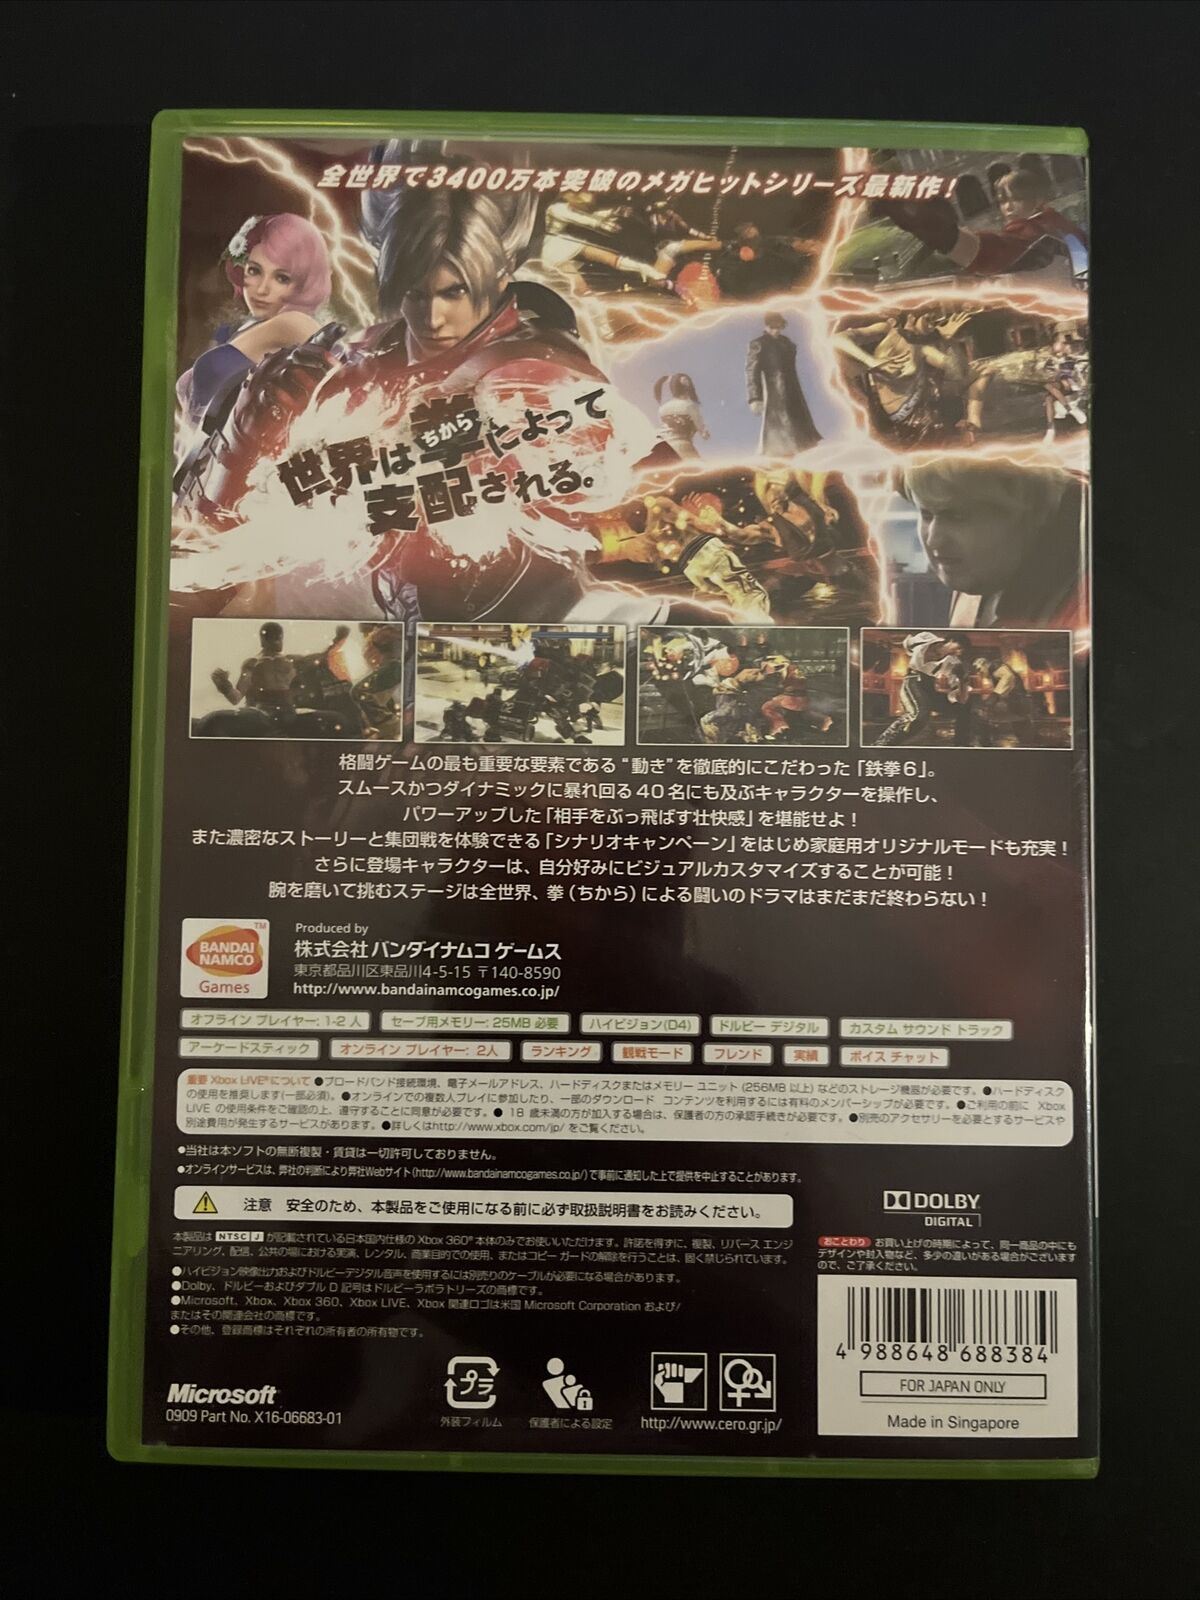 Tekken 6 - Microsoft XBOX 360 NTSC-J JAPAN NAMCO Game with Manual